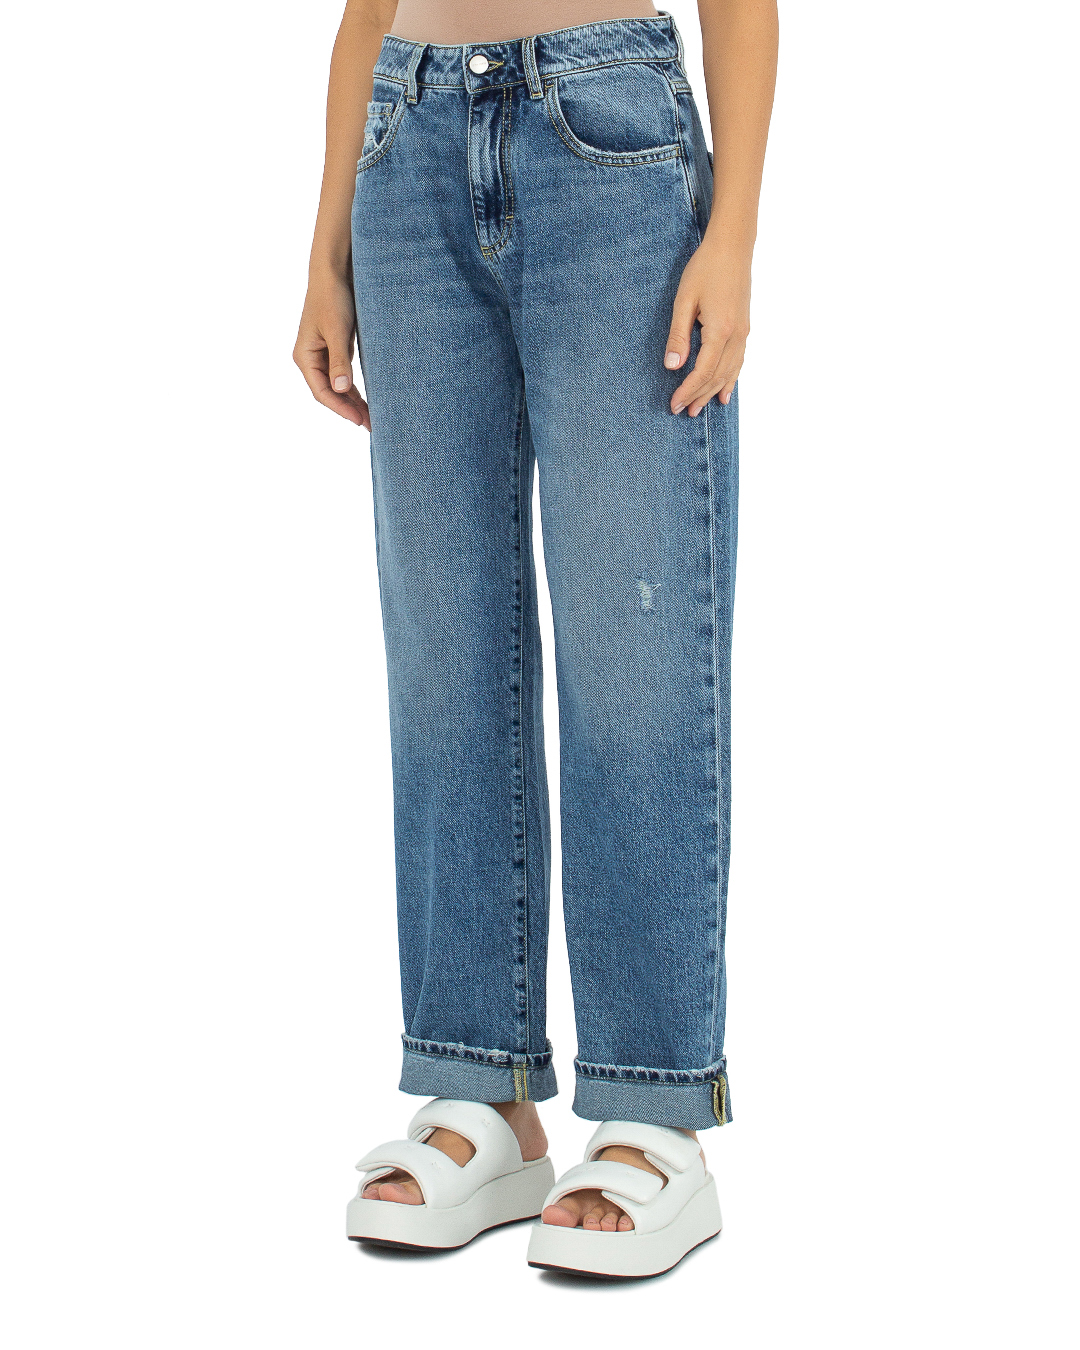 джинсы ICON DENIM BELLAID709 синий 25, размер 25 - фото 3